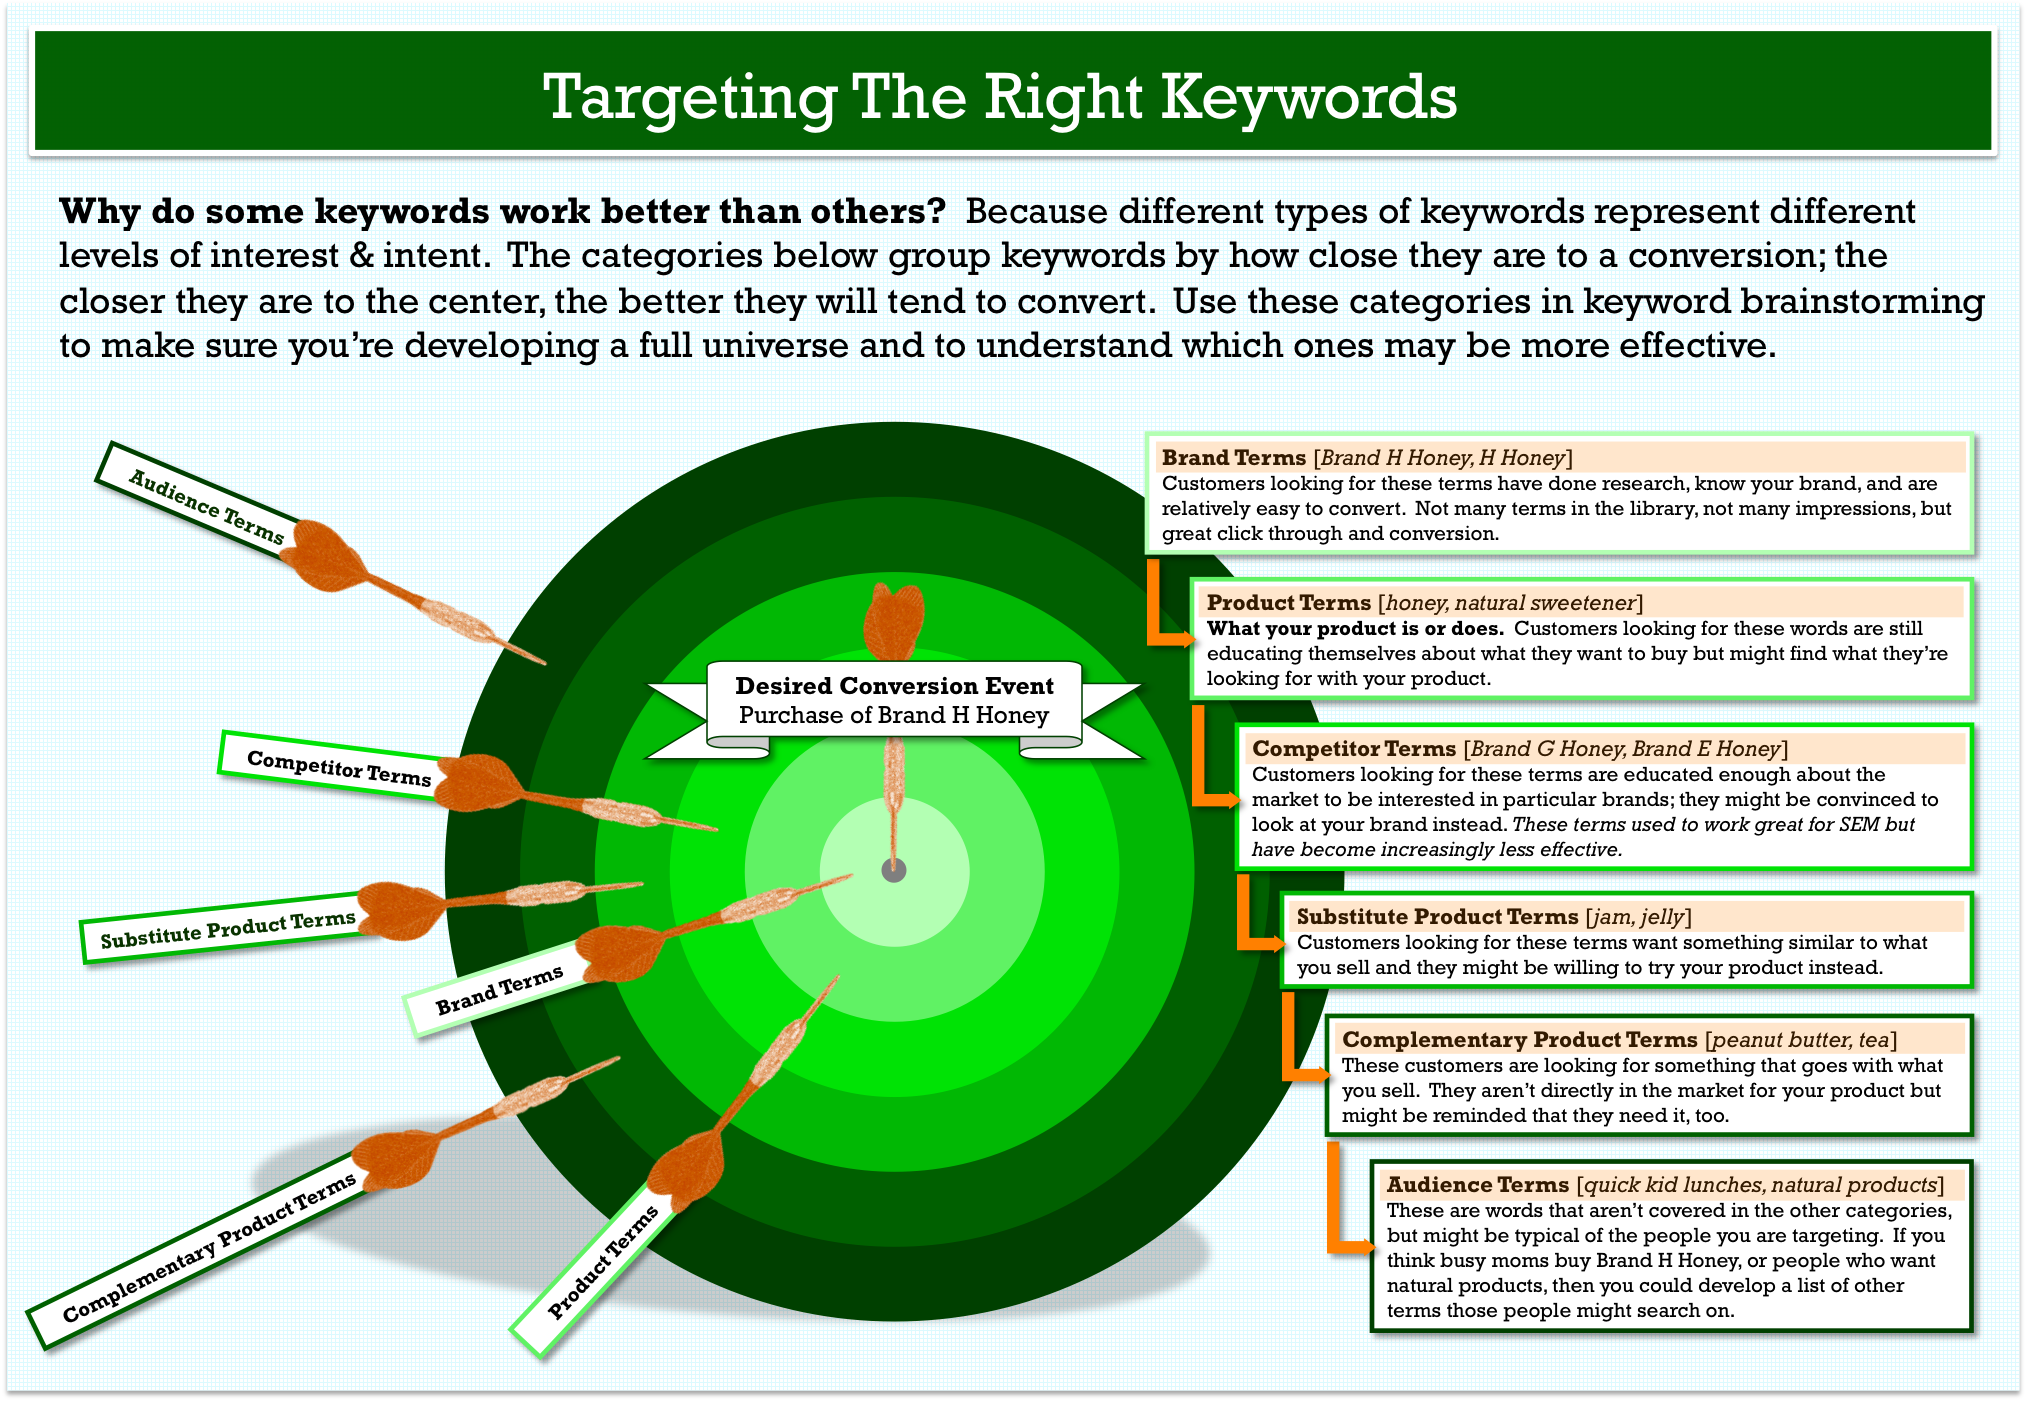 Targeting the right keywords - KISSmetrics